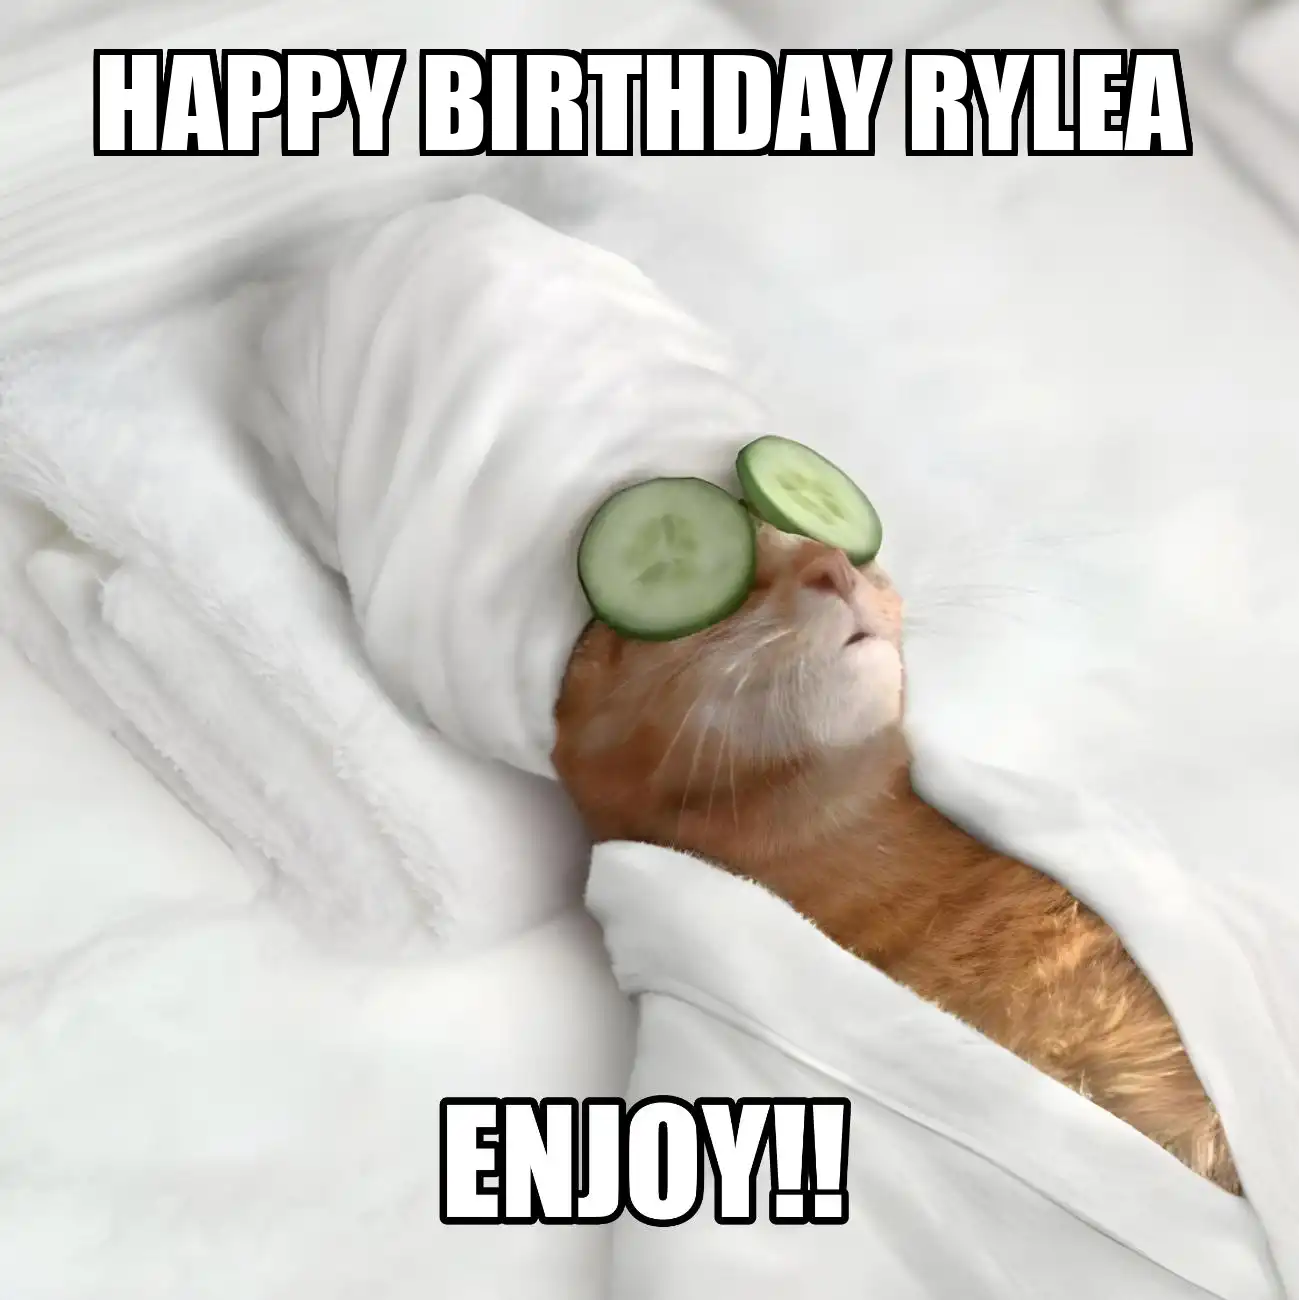 Happy Birthday Rylea Enjoy Cat Meme